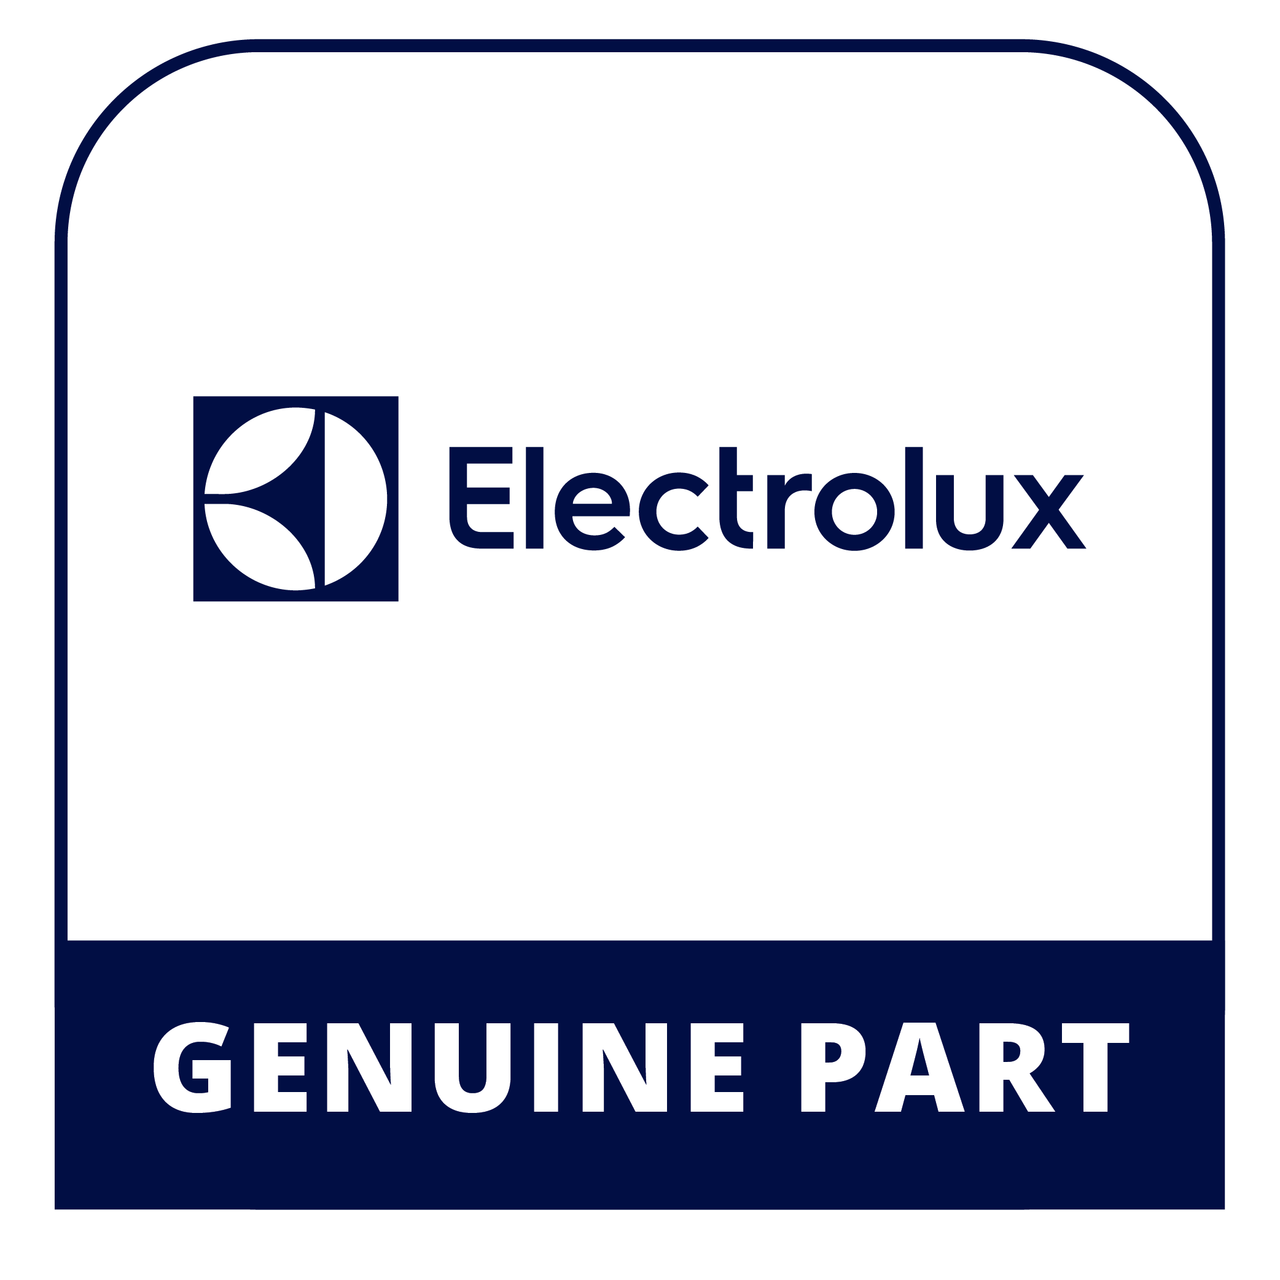 Frigidaire - Electrolux 134611700 Housing - Genuine Electrolux Part